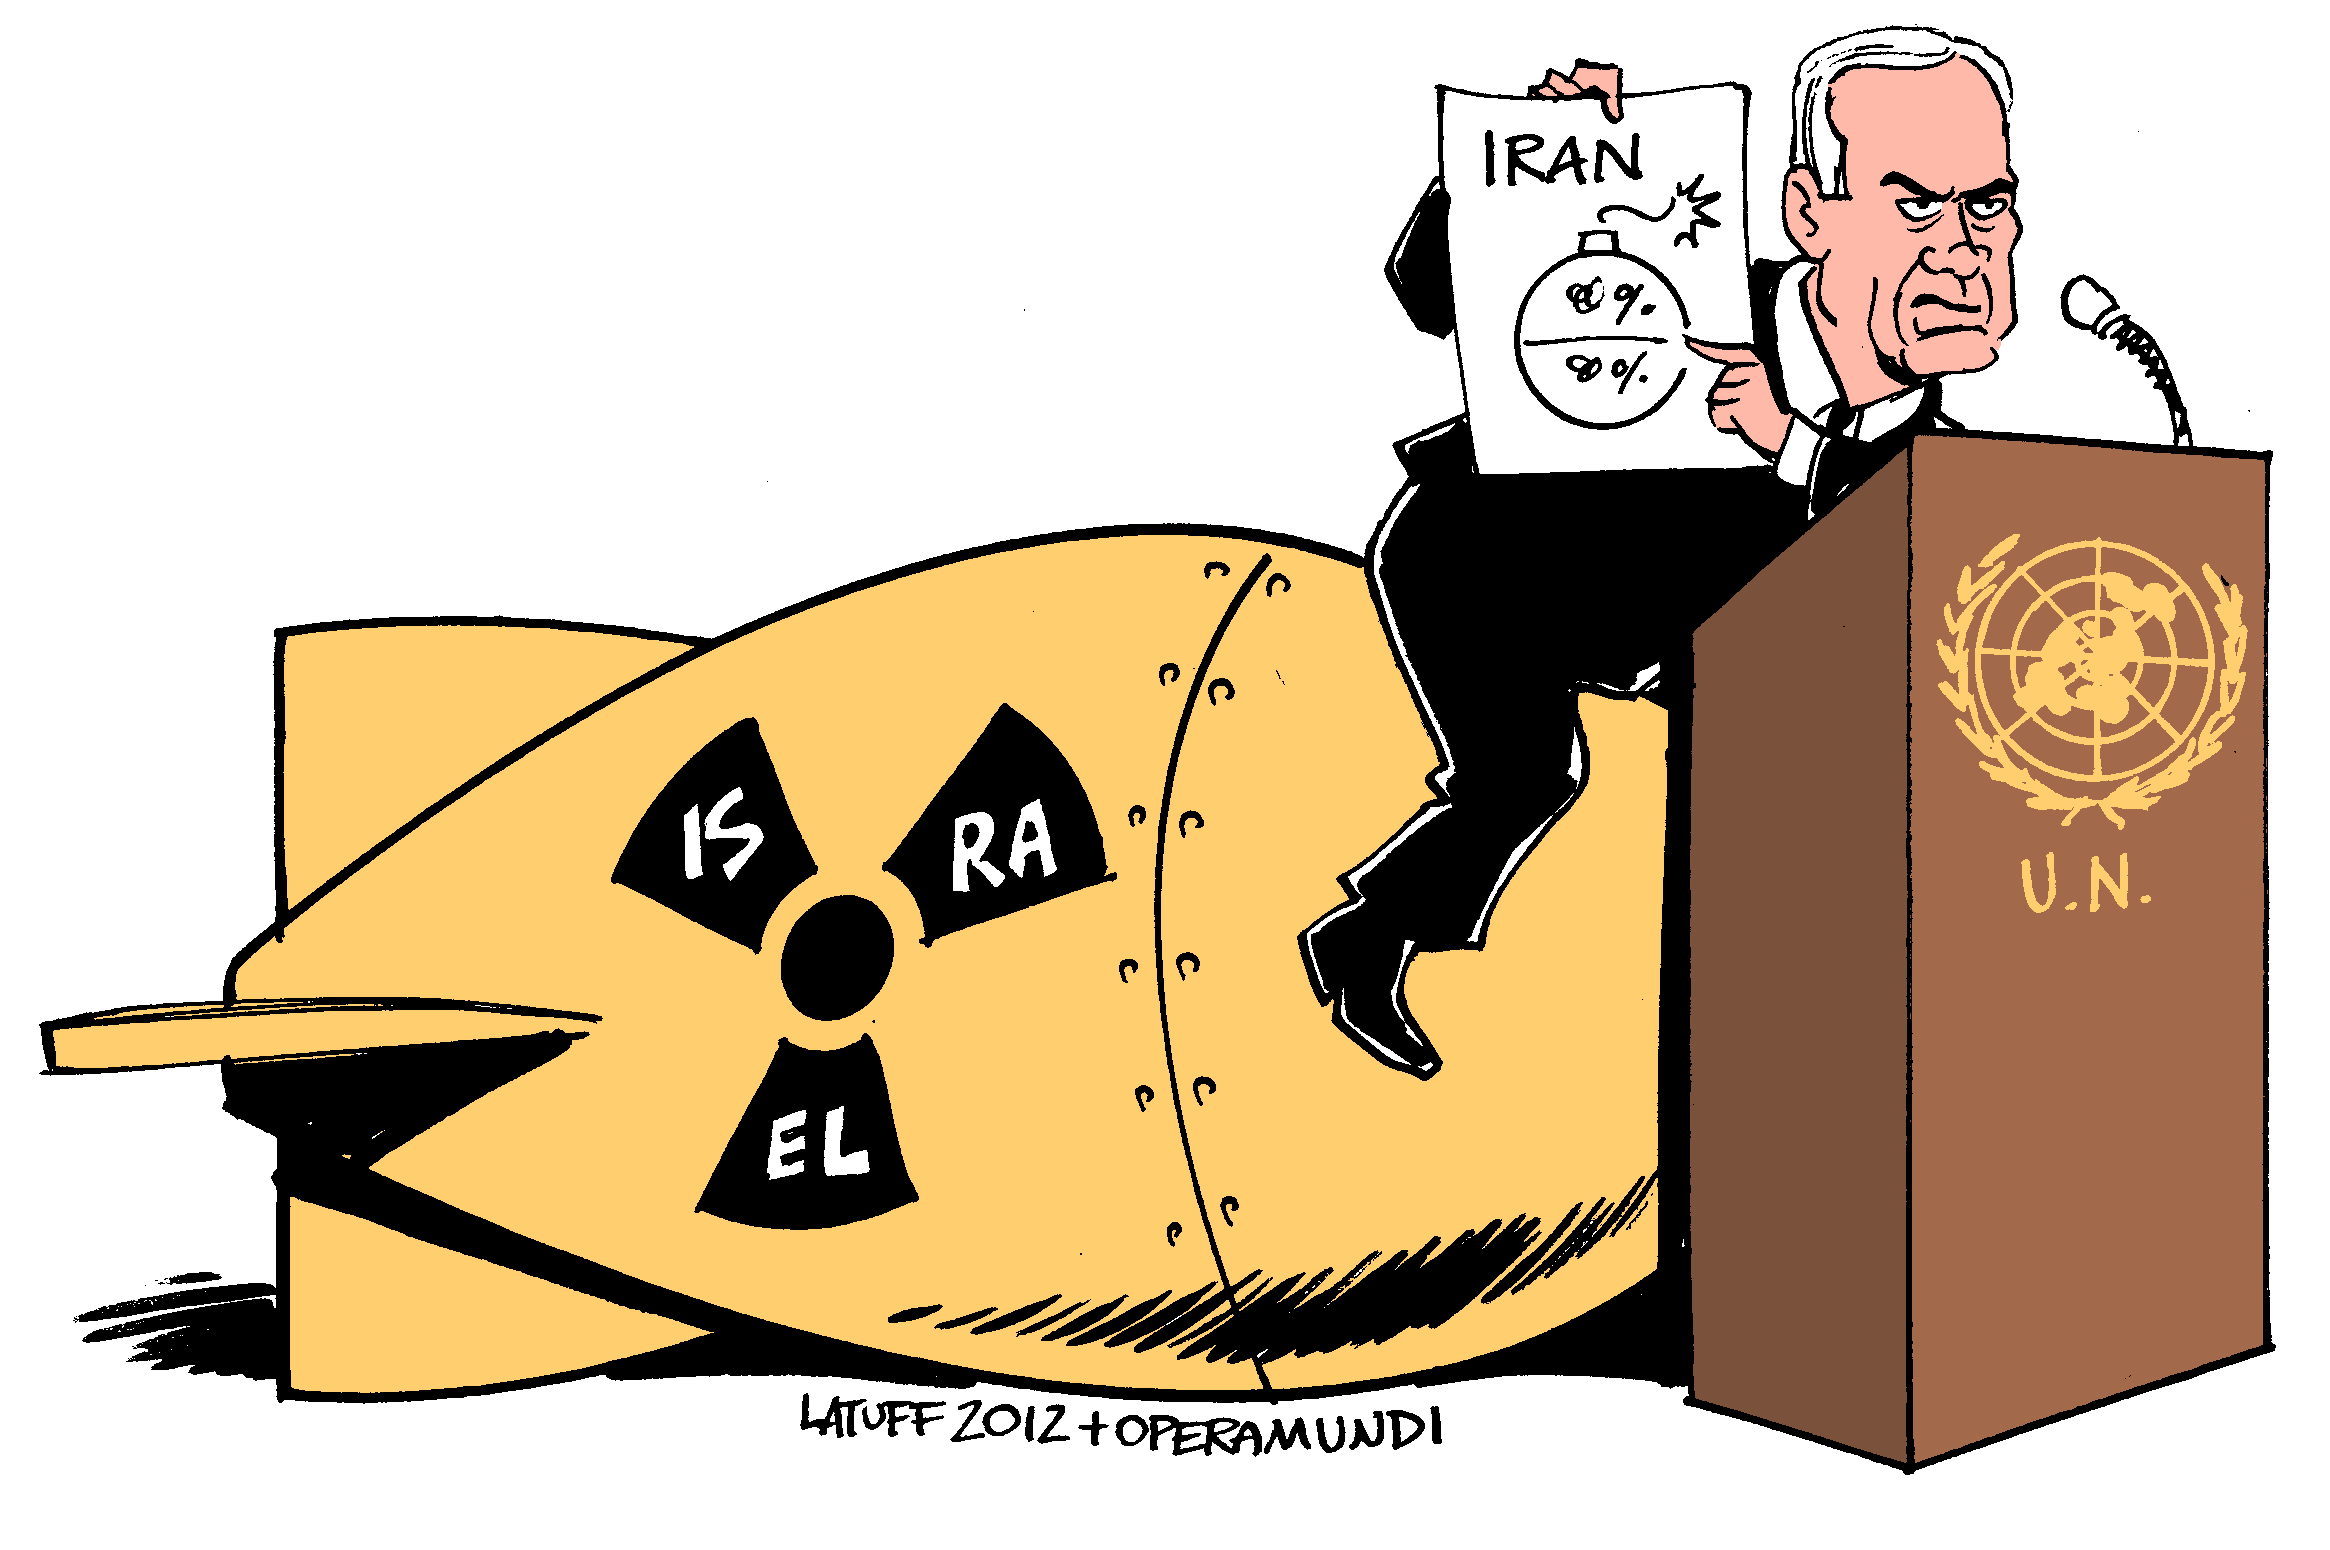 netanyahu-speaks-at-un-about-iranian-bomb.gif